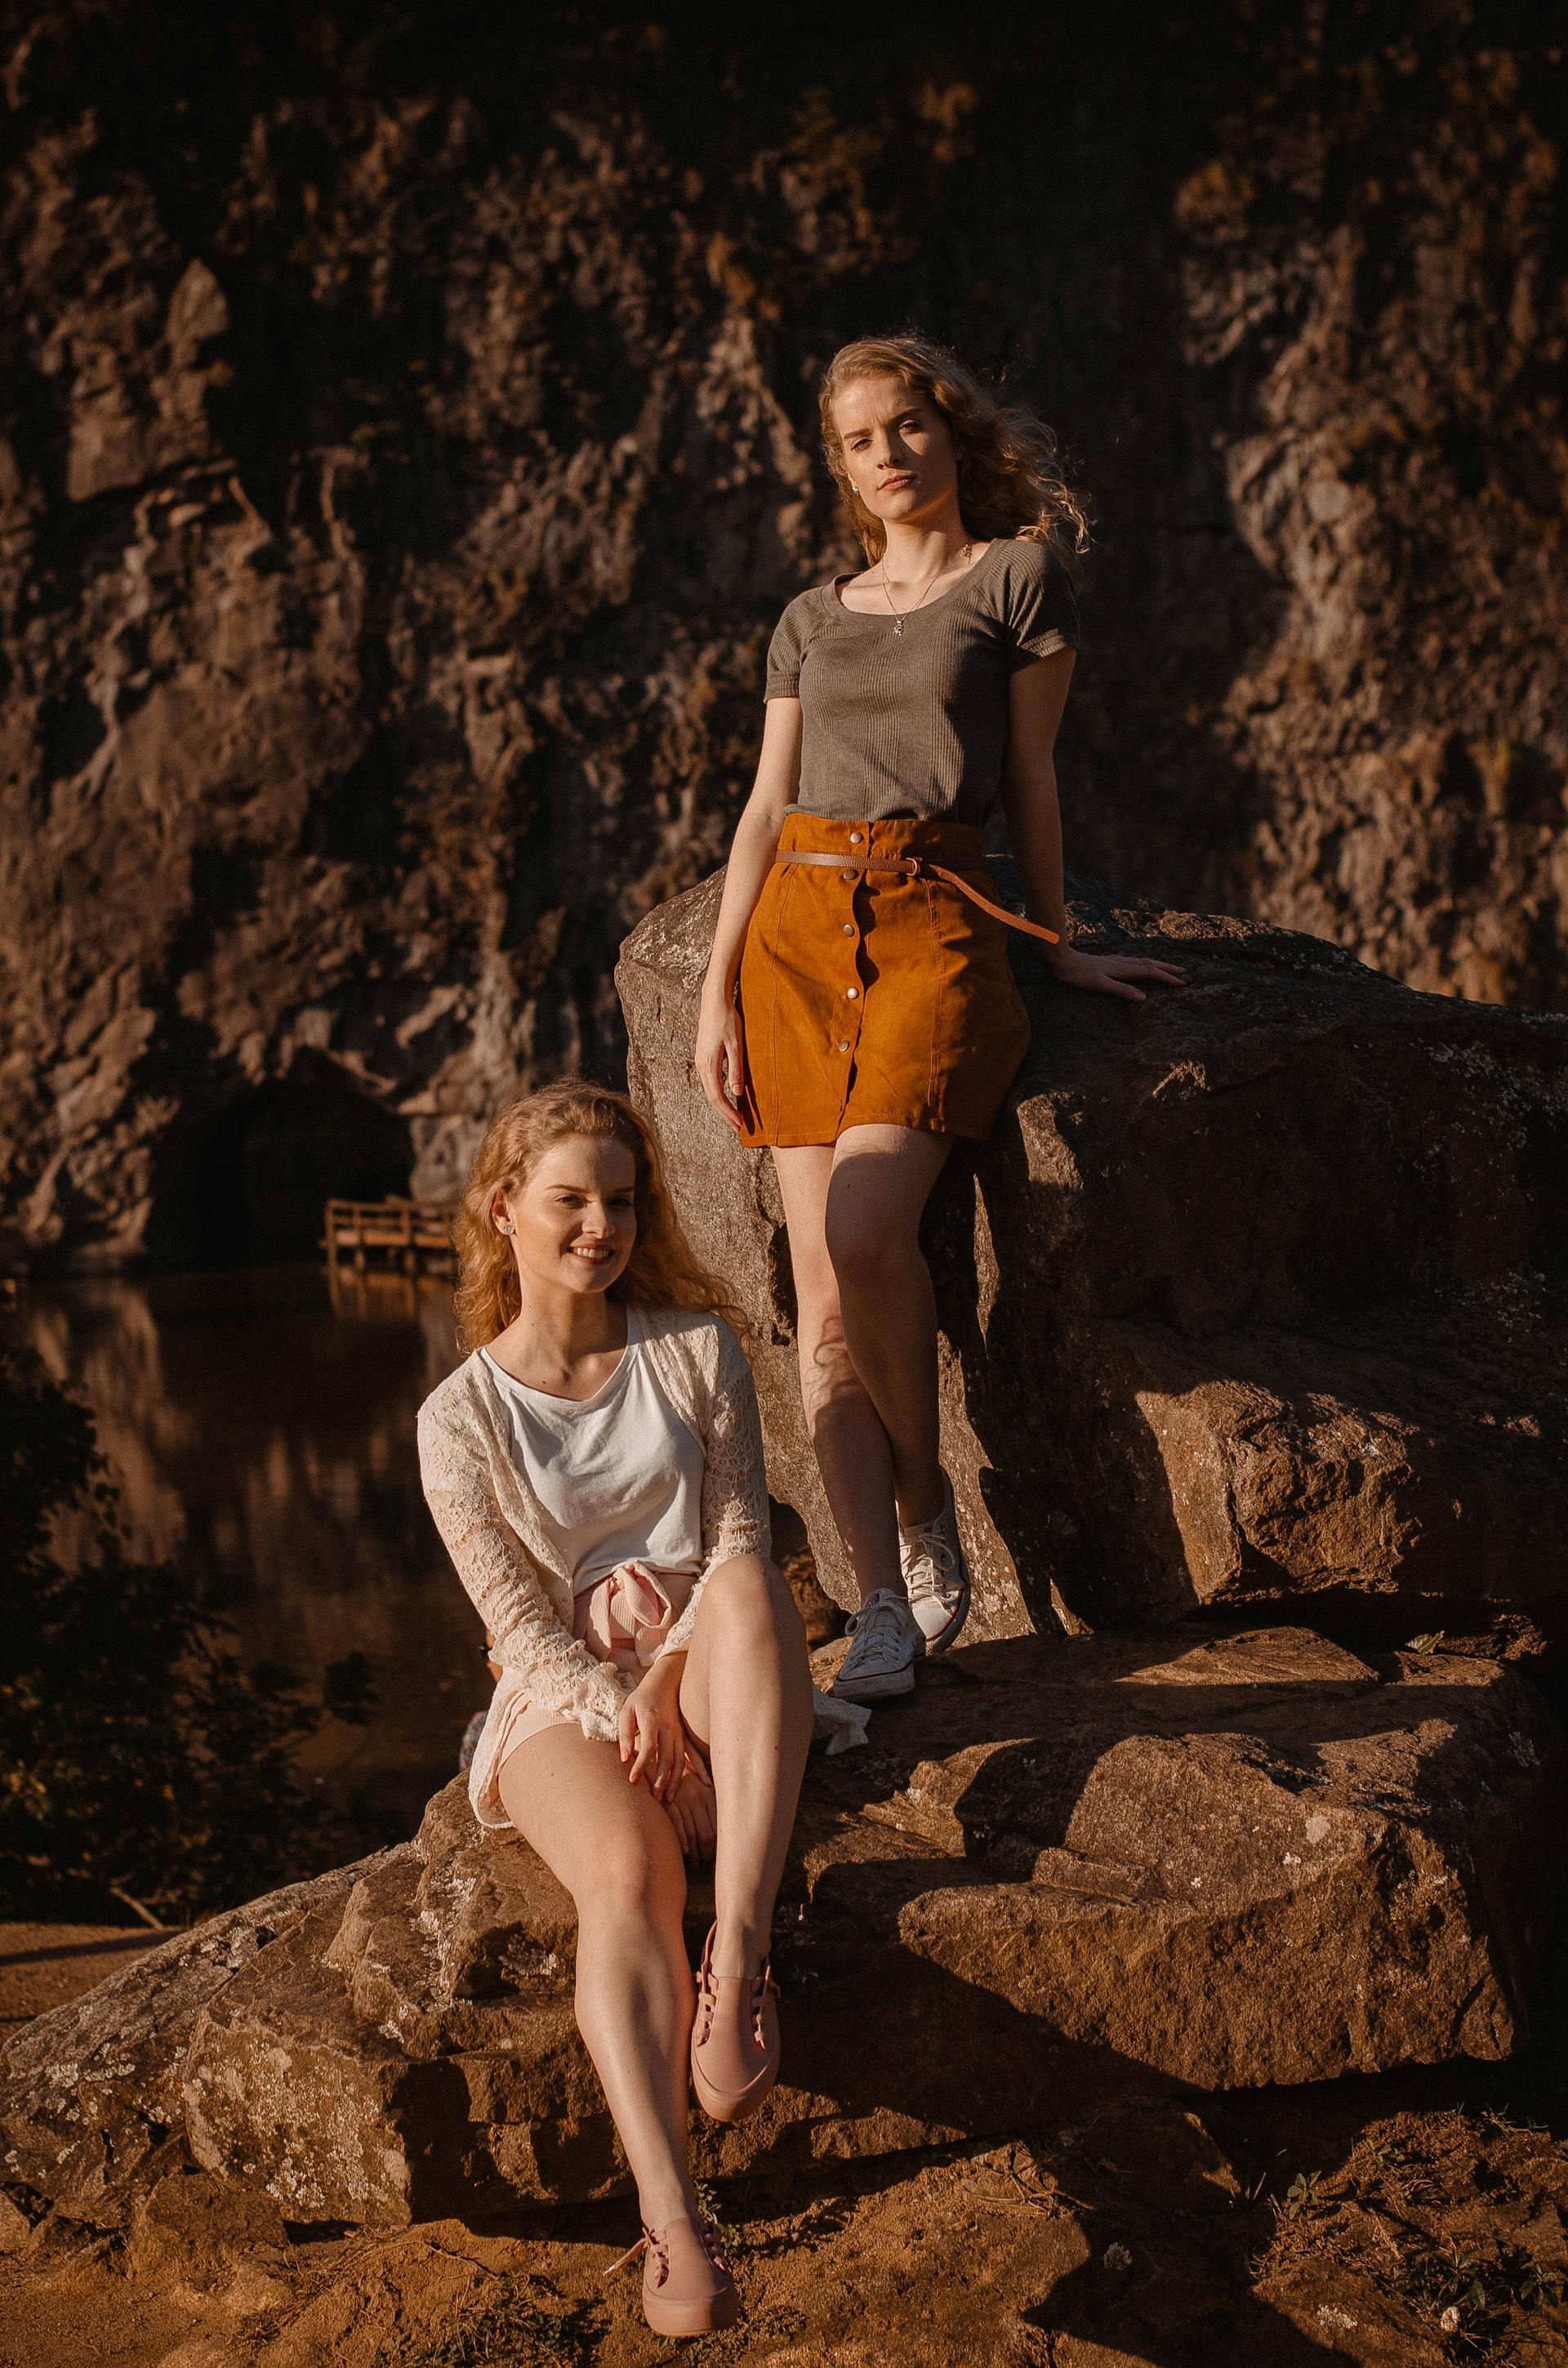 Two women posing on rocks | Source: Pexels